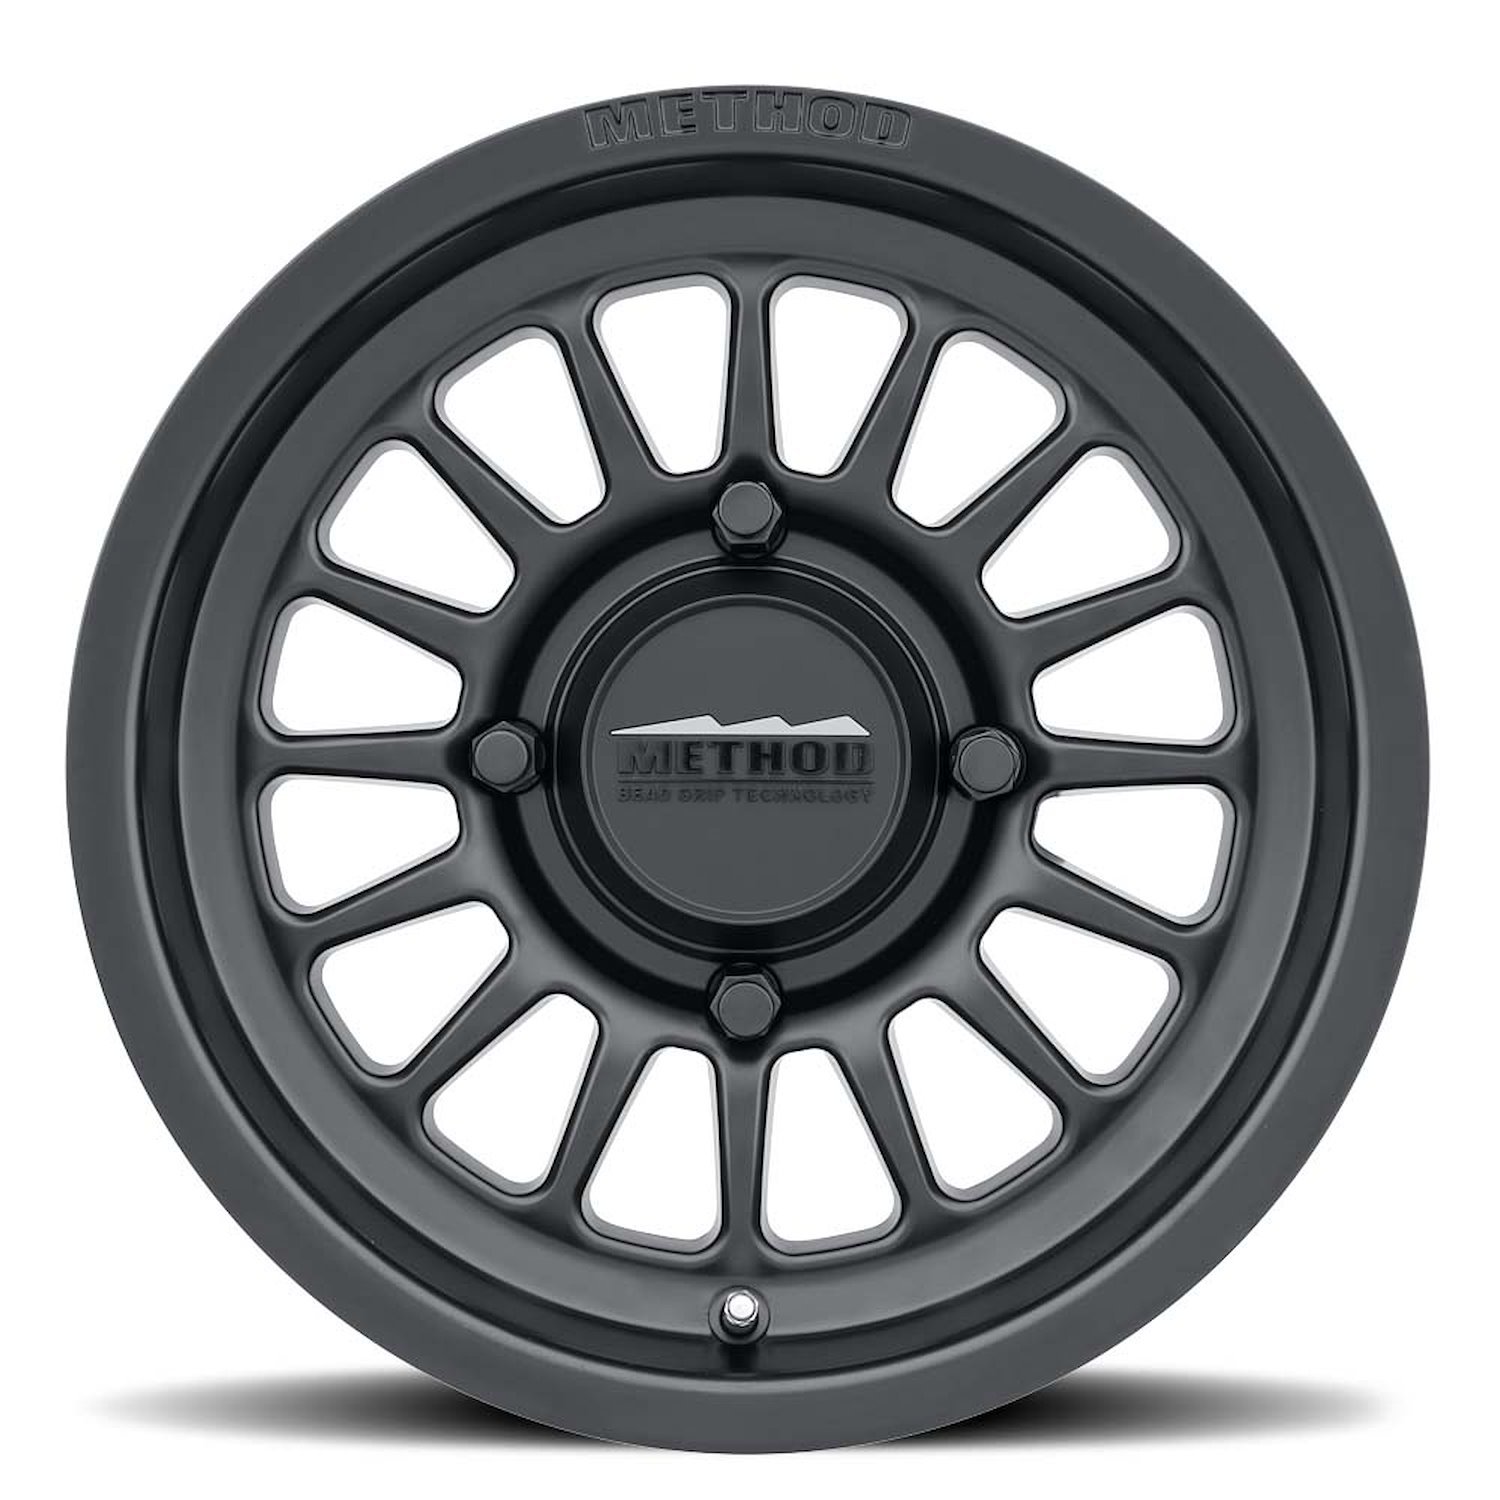 MR41157046552 UTV MR411 Bead Grip Wheel [Size: 15" x 7"] Matte Black